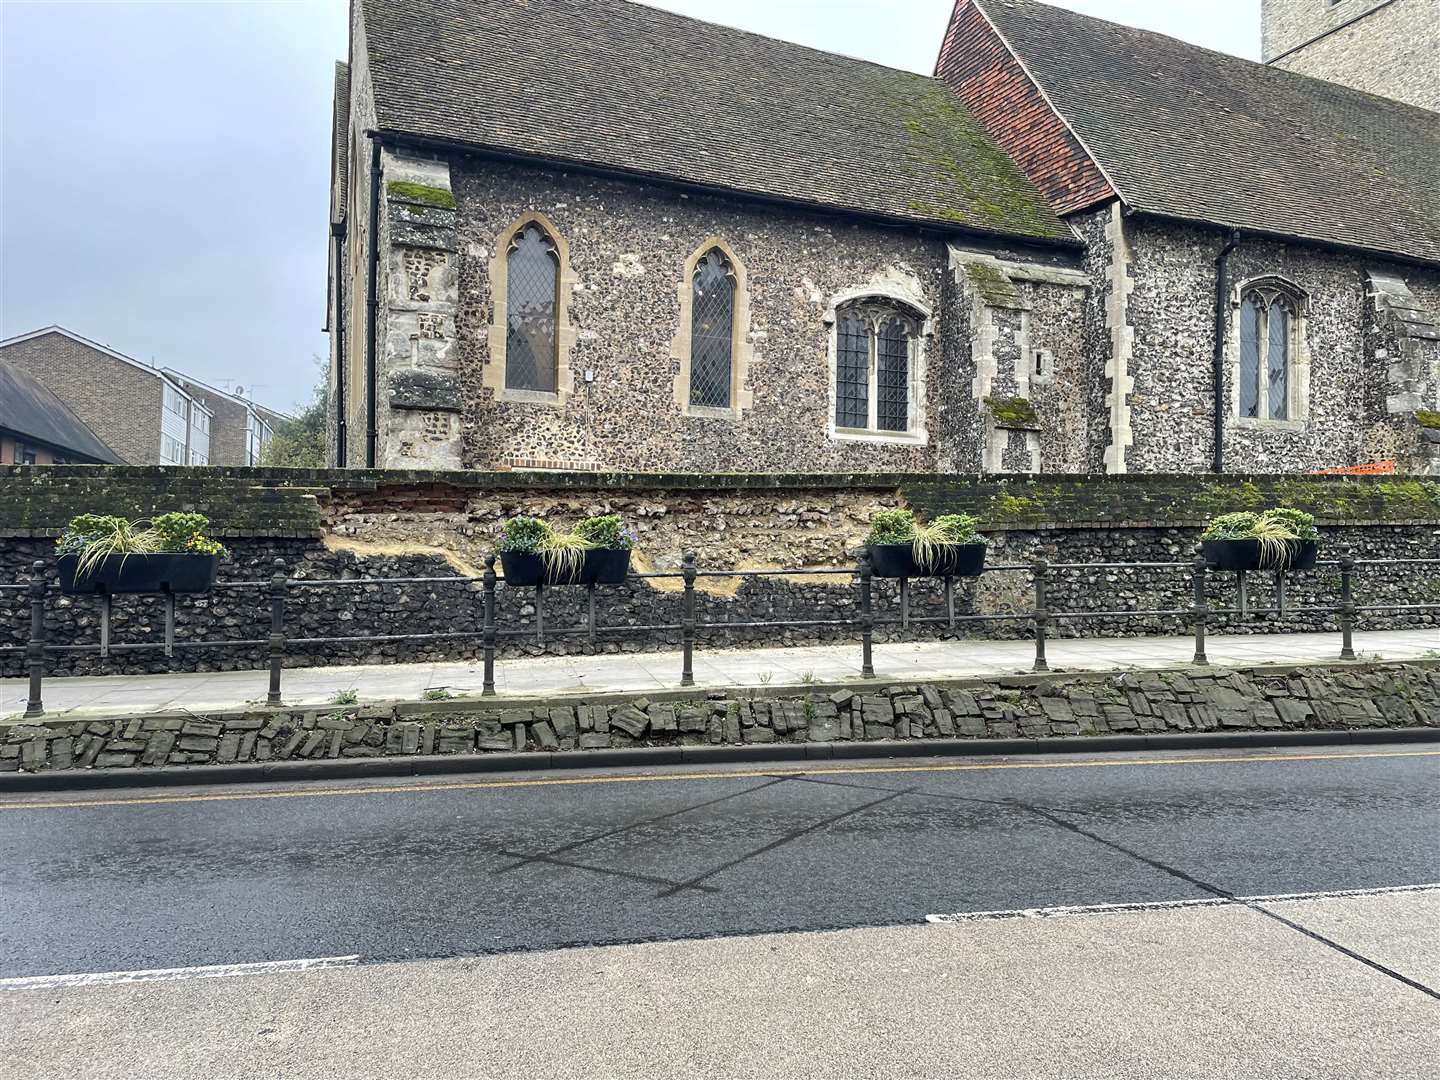 The damaged wall at St Margaret's Church, Rainham